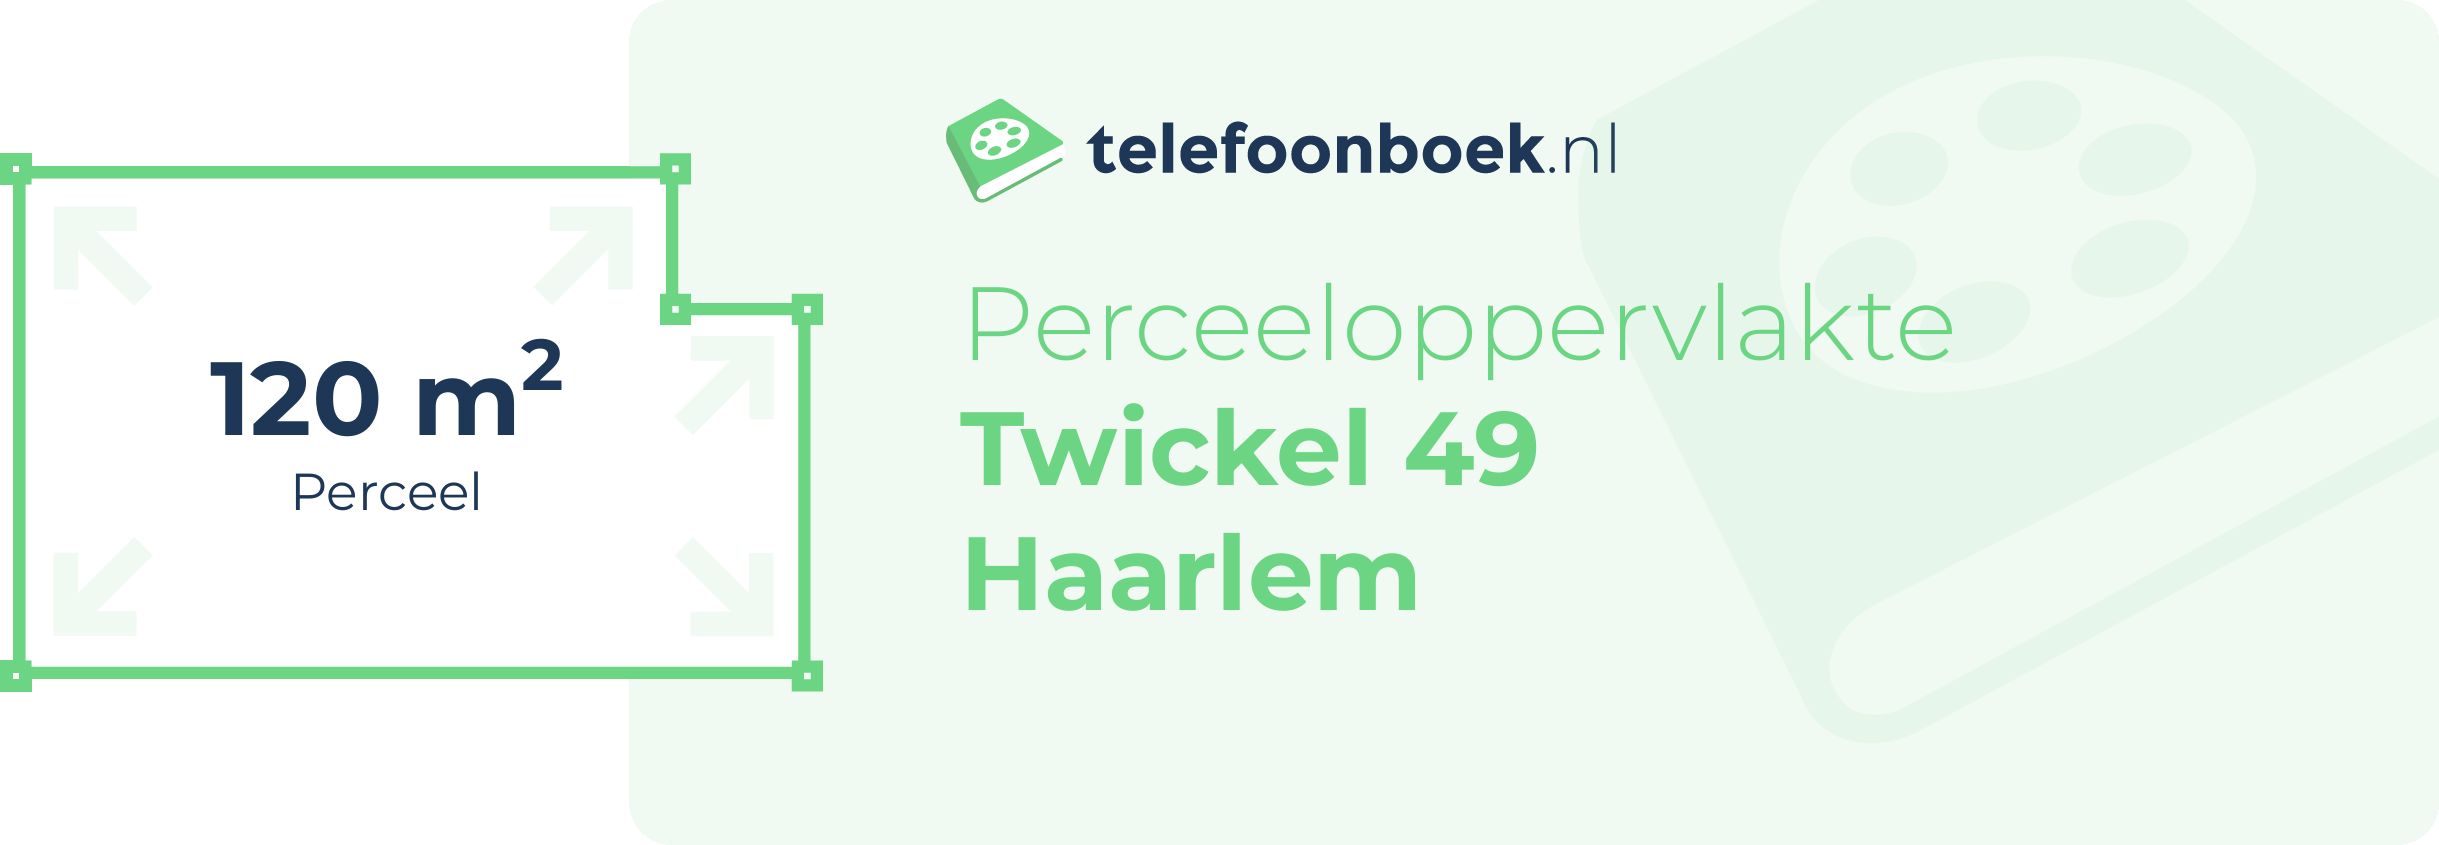 Perceeloppervlakte Twickel 49 Haarlem